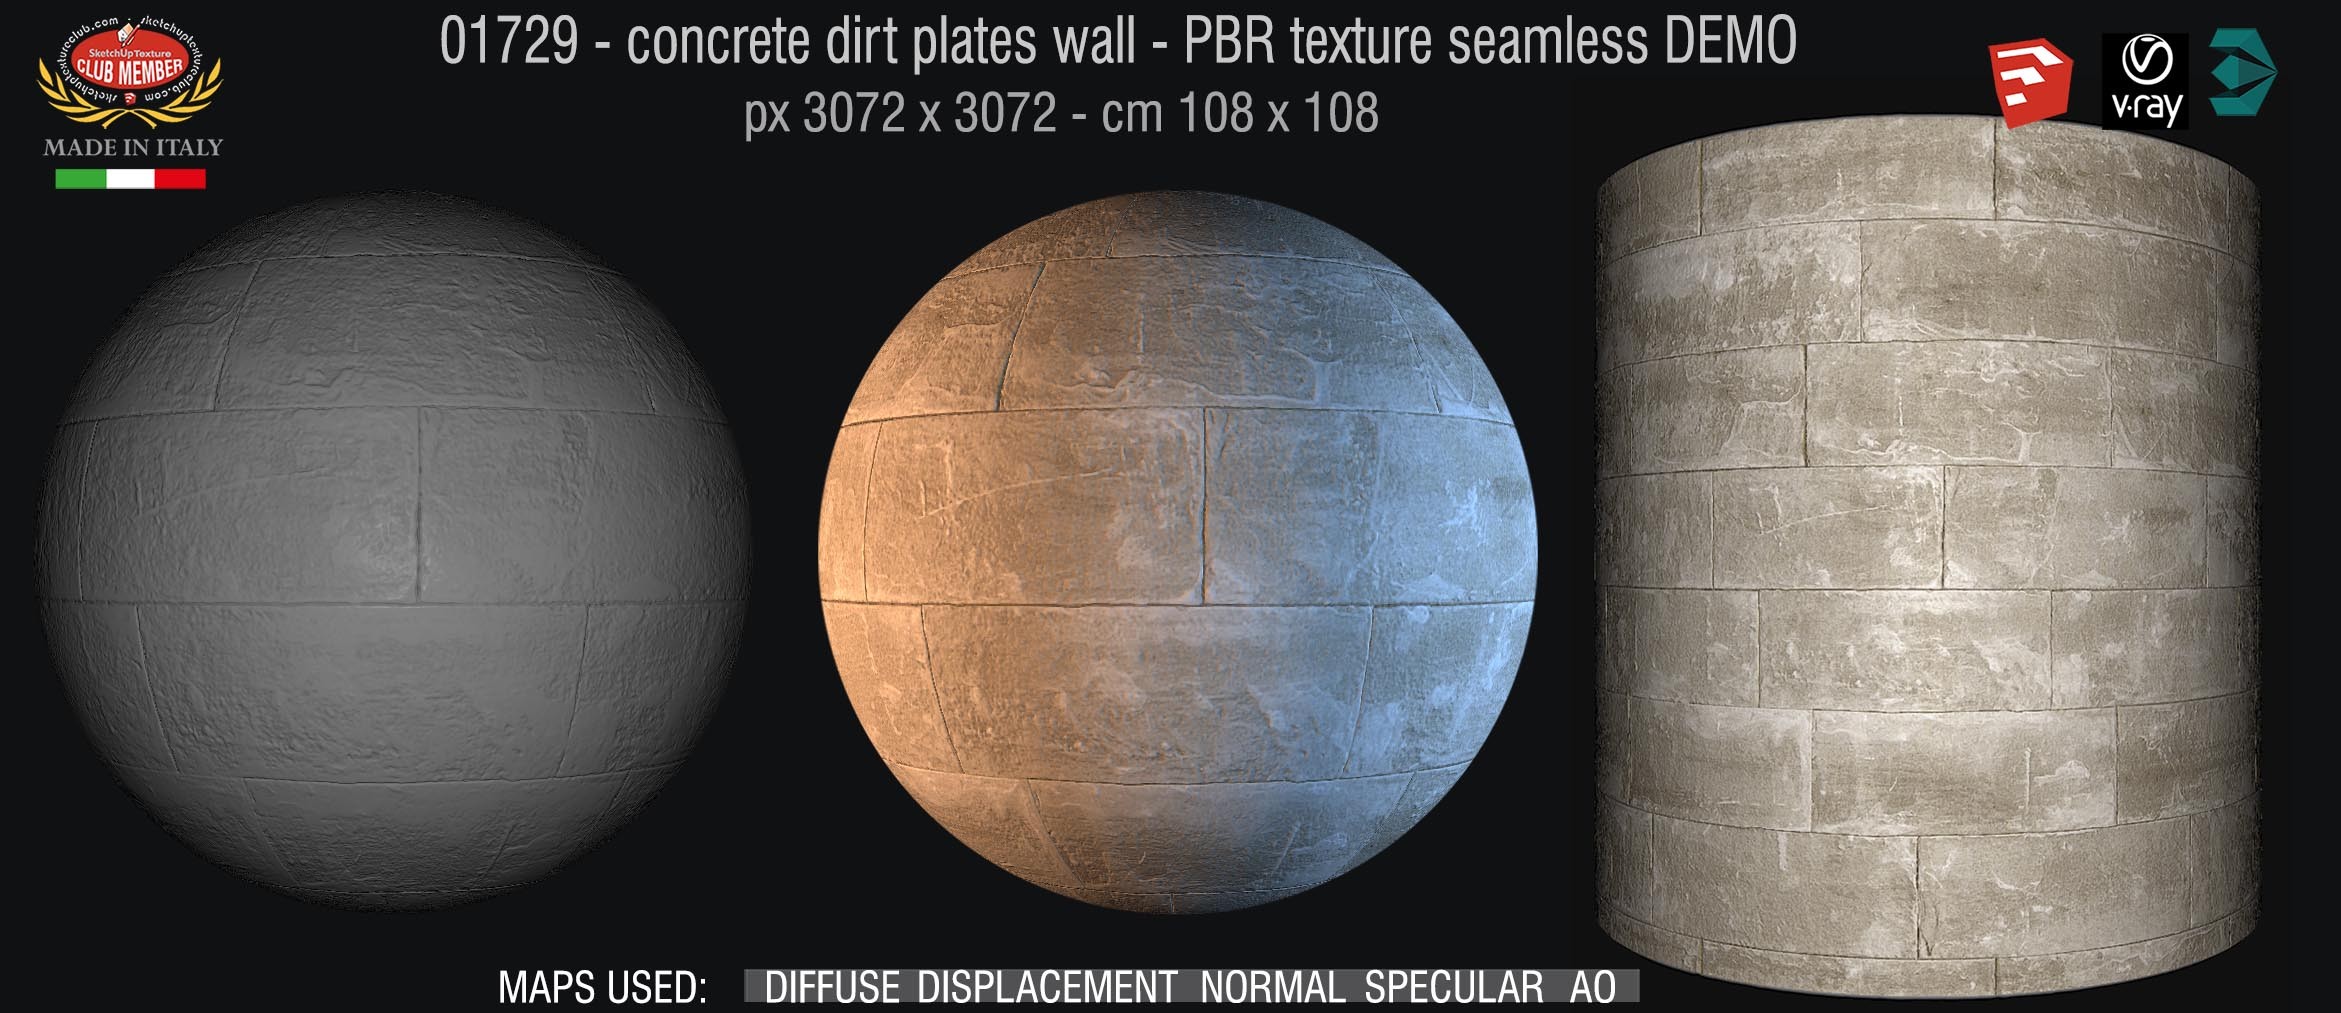 01729 concrete dirt plates wall PBR texture seamless DEMO